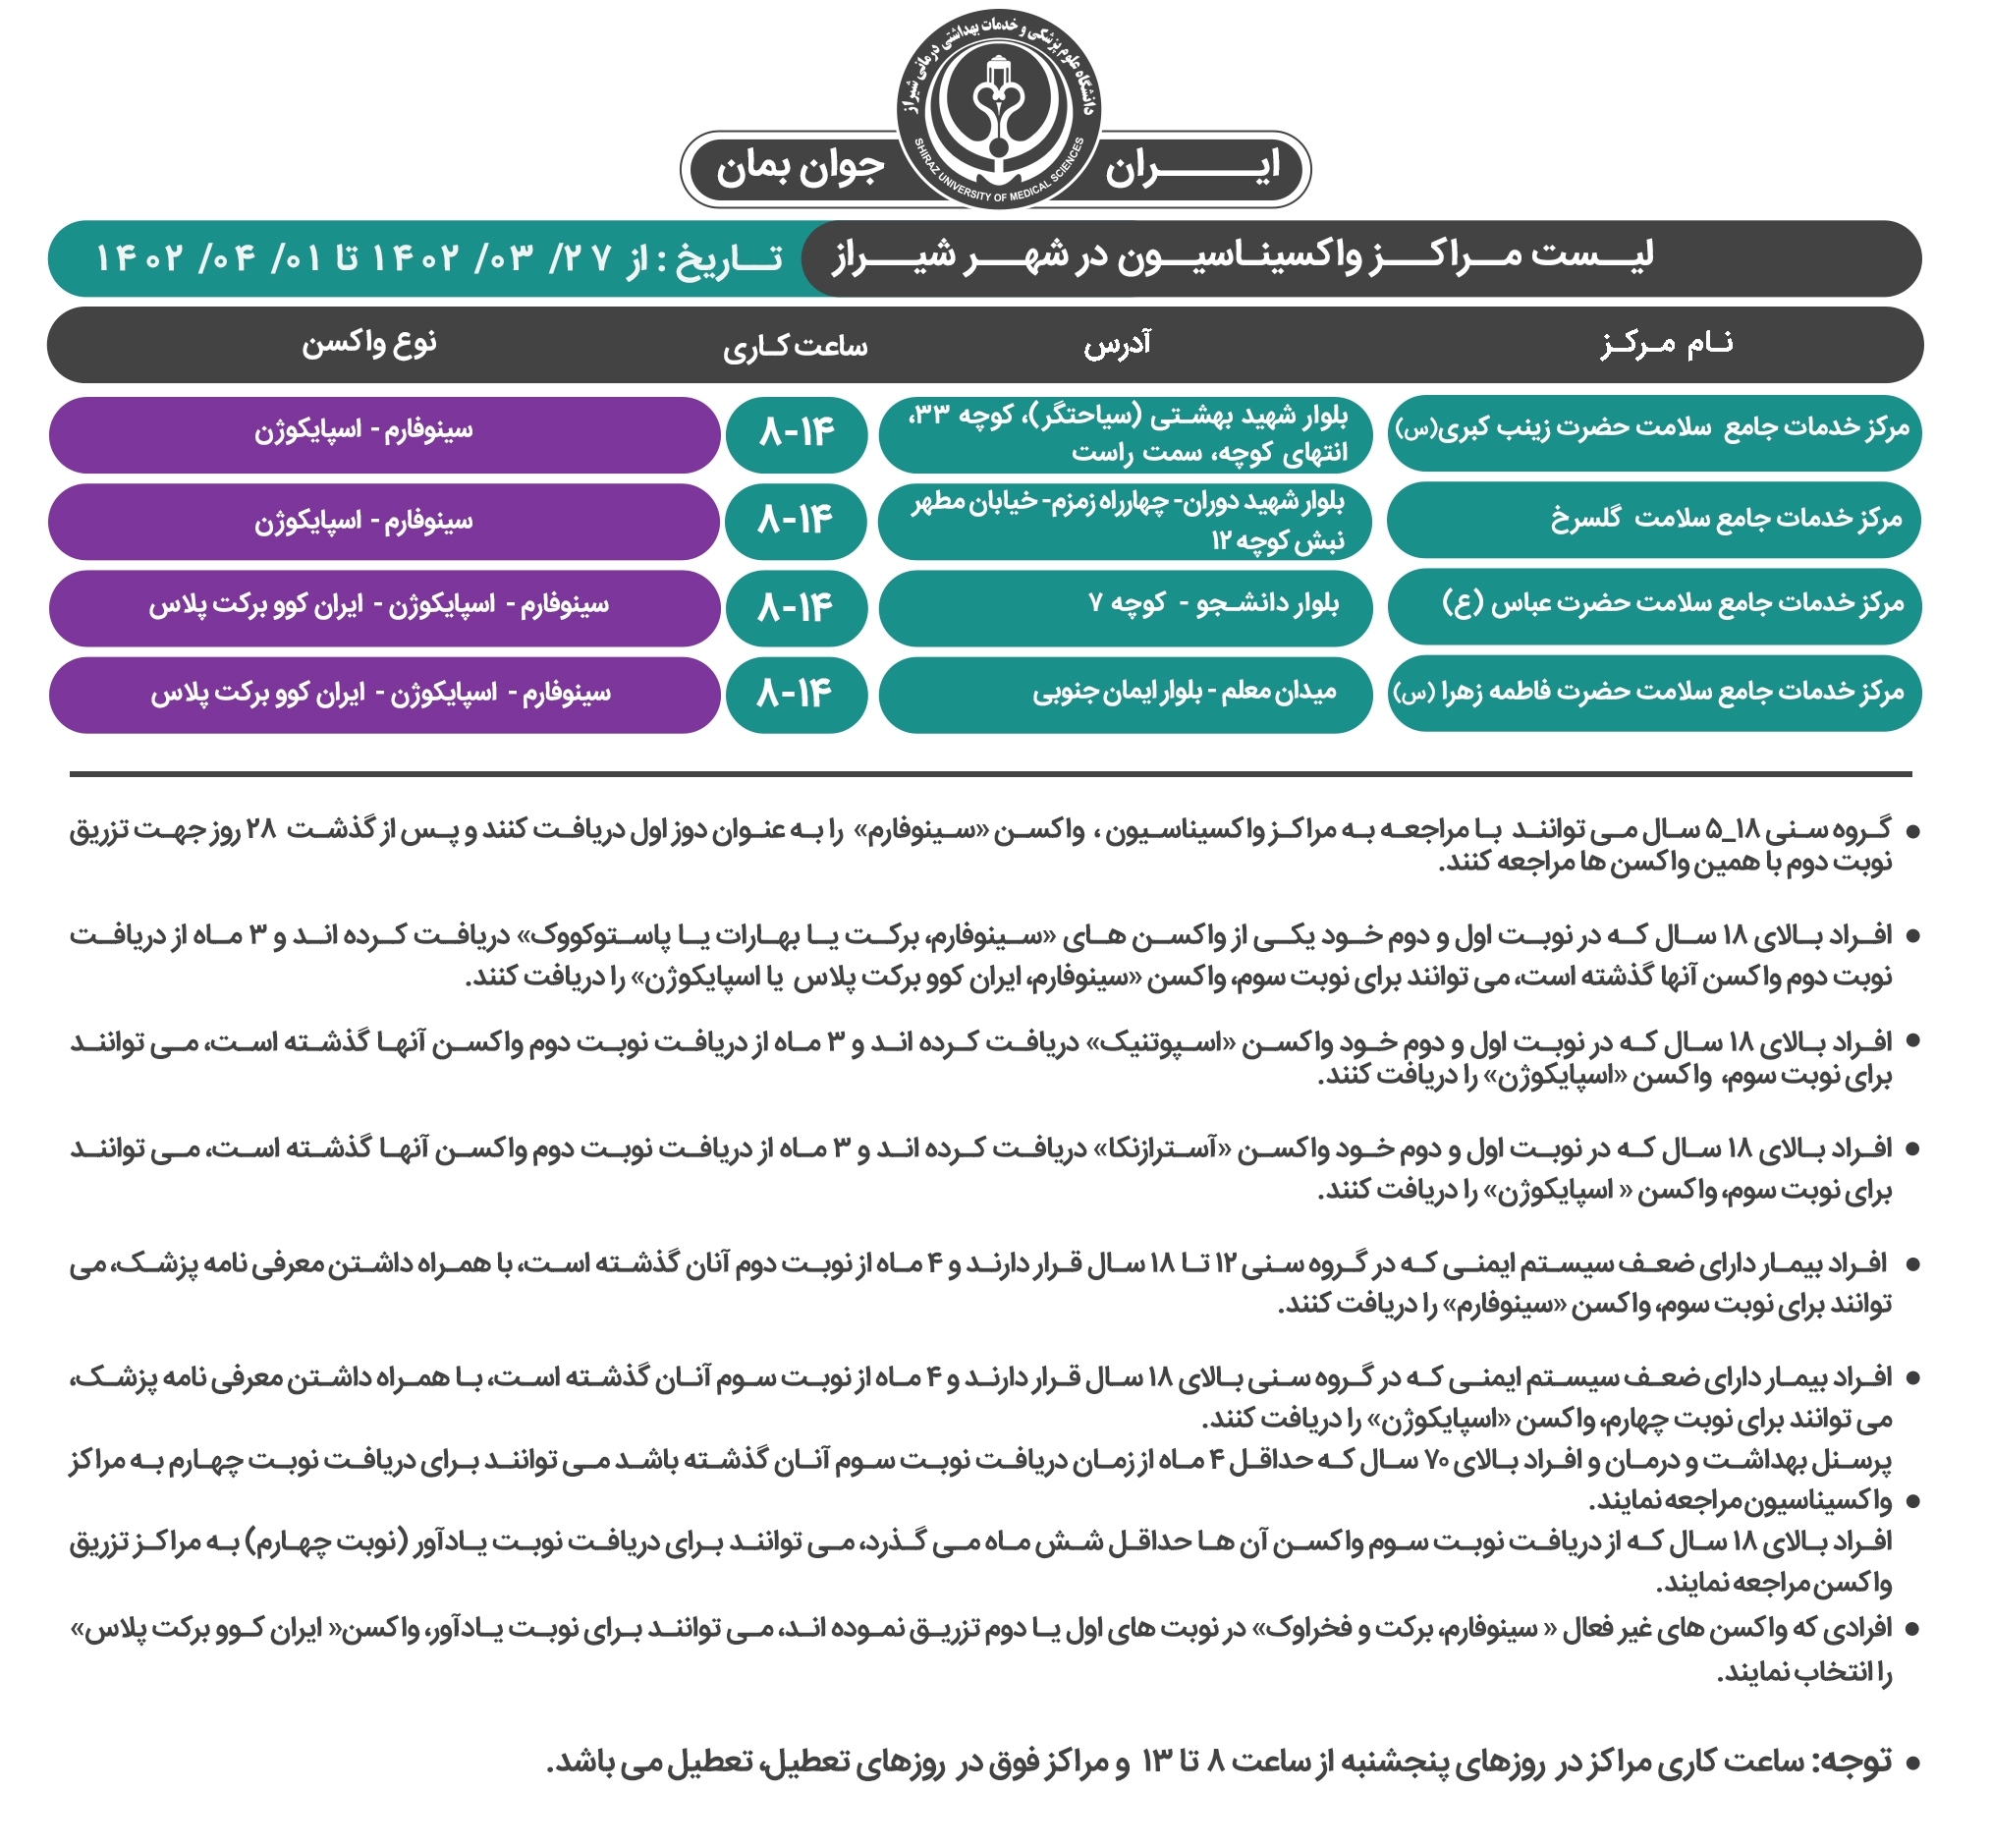 اعلام مراکز واکسیناسیون کرونا در شیراز